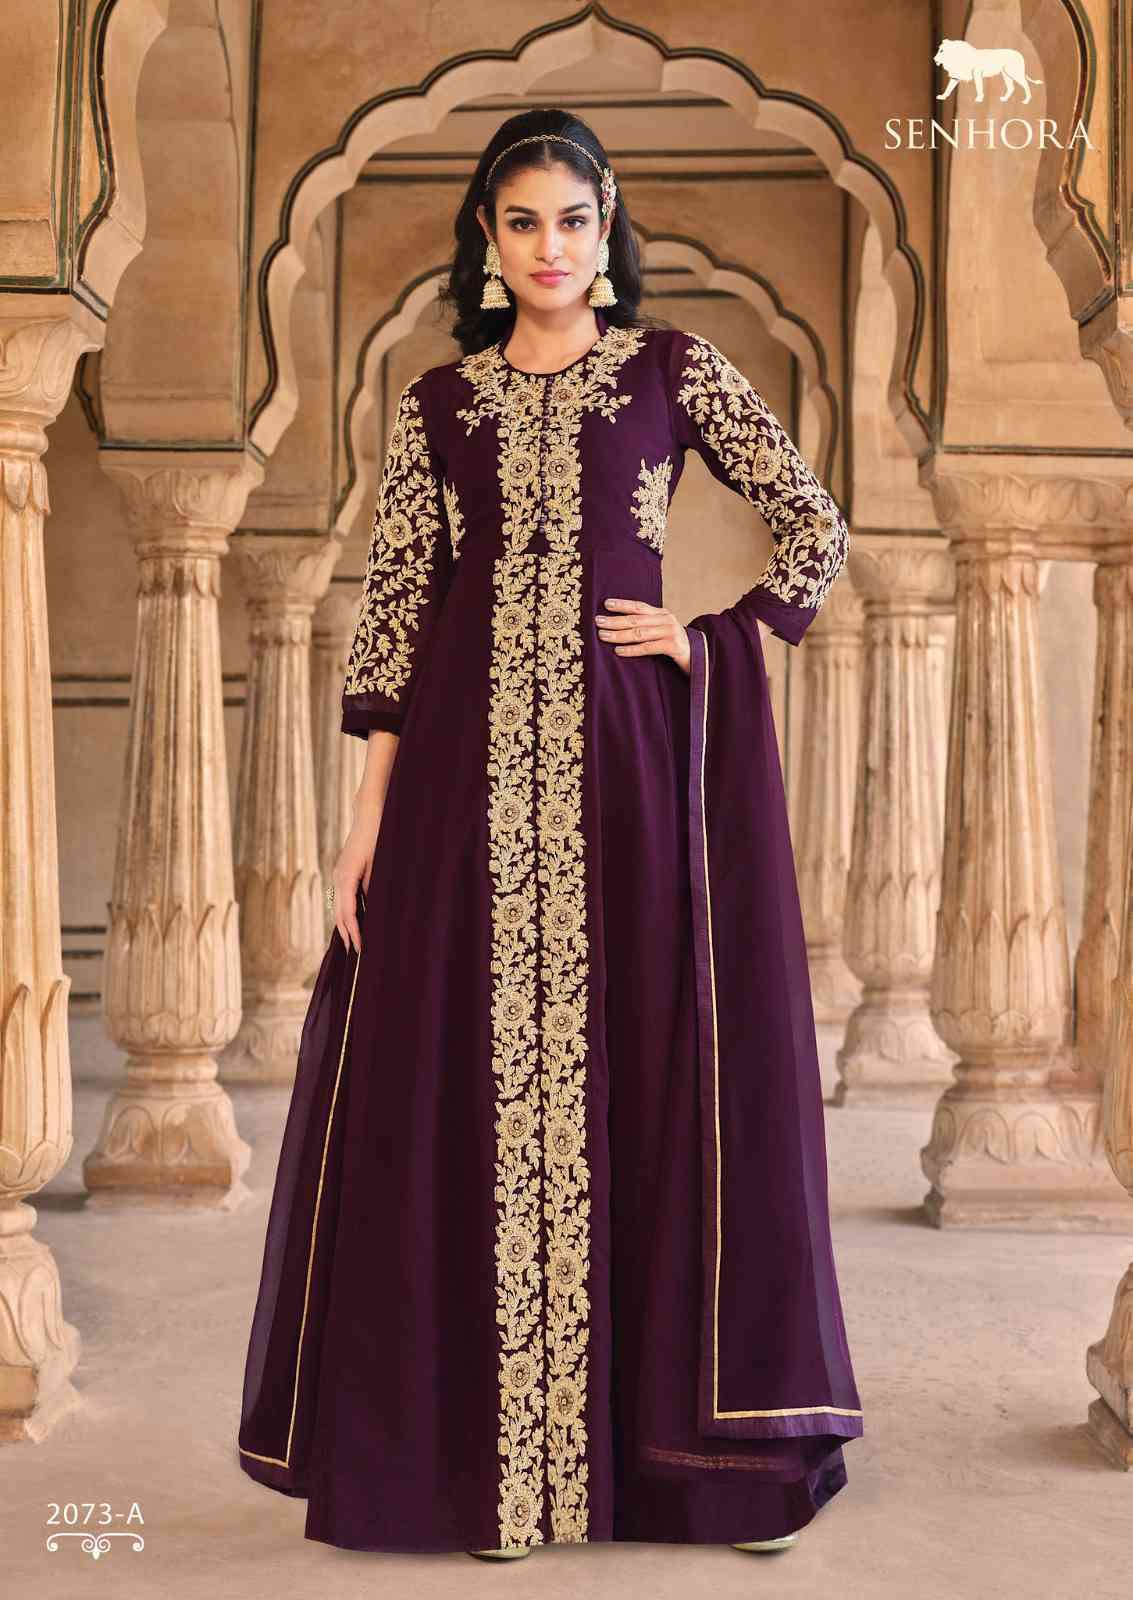 Senhora presents Aadhya 2073 colors real georgette designer gown style salwar suit wholesaler 